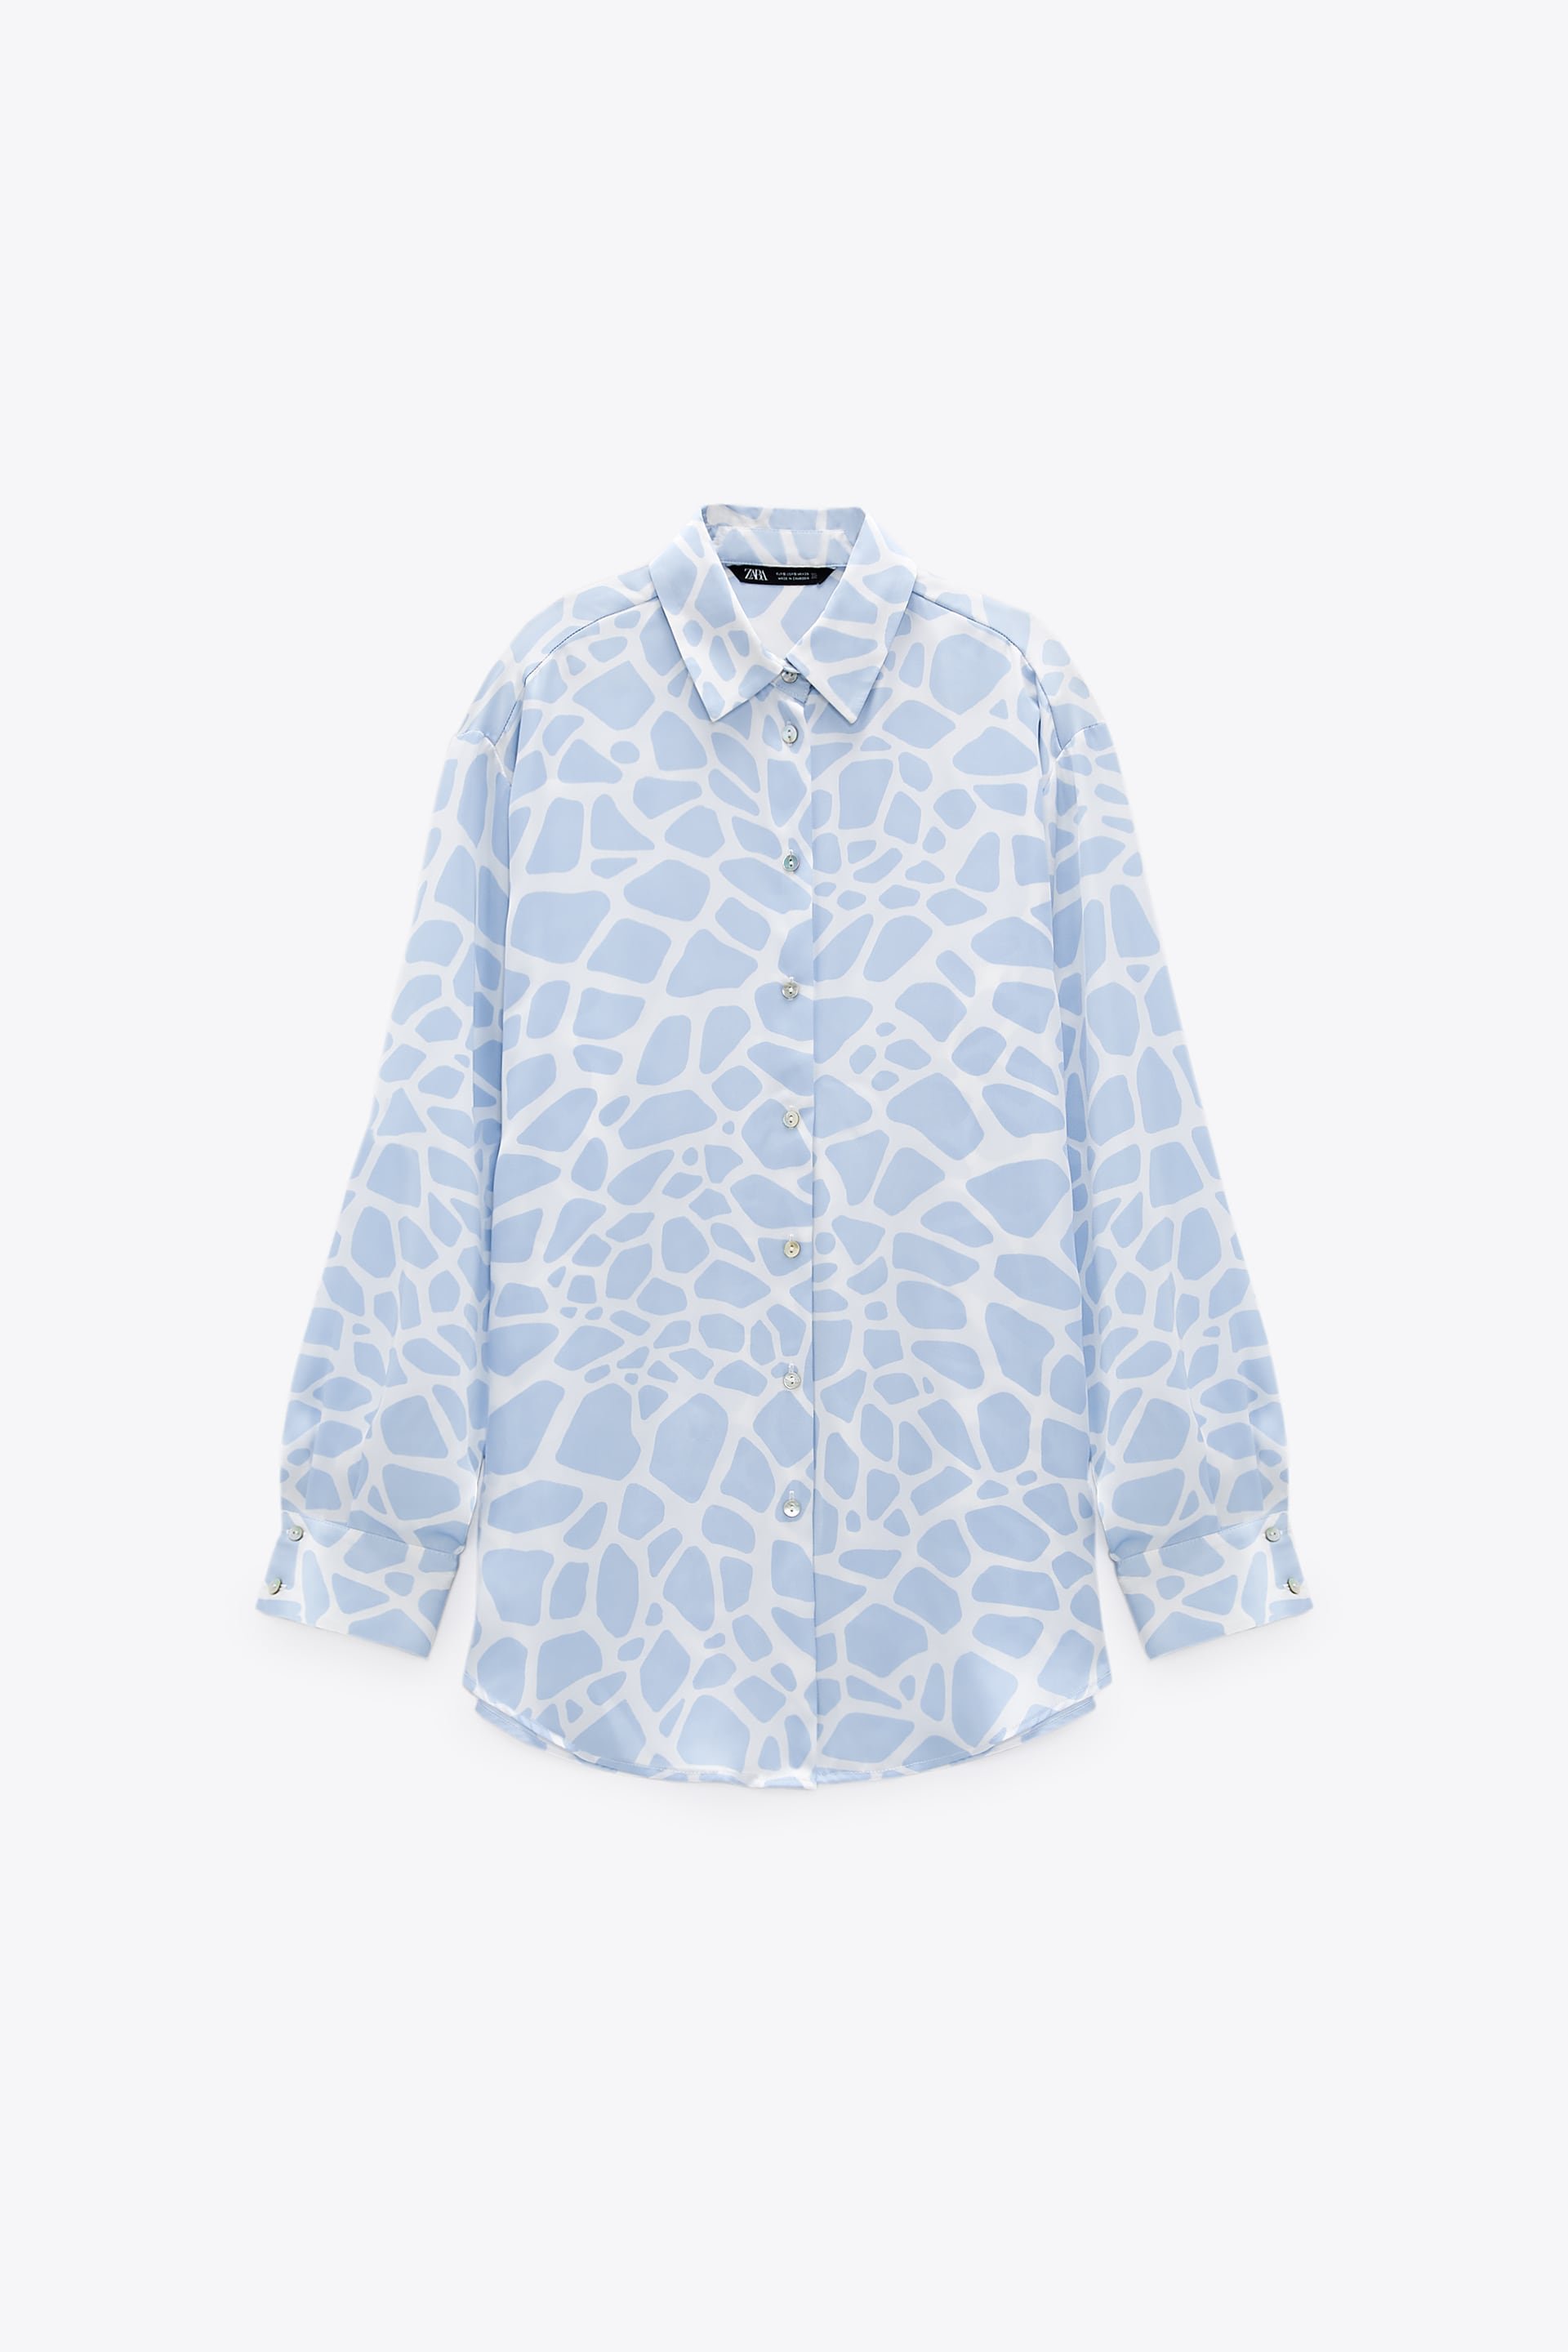 Zara Animal Print Satin Shirt in Blue.jpg